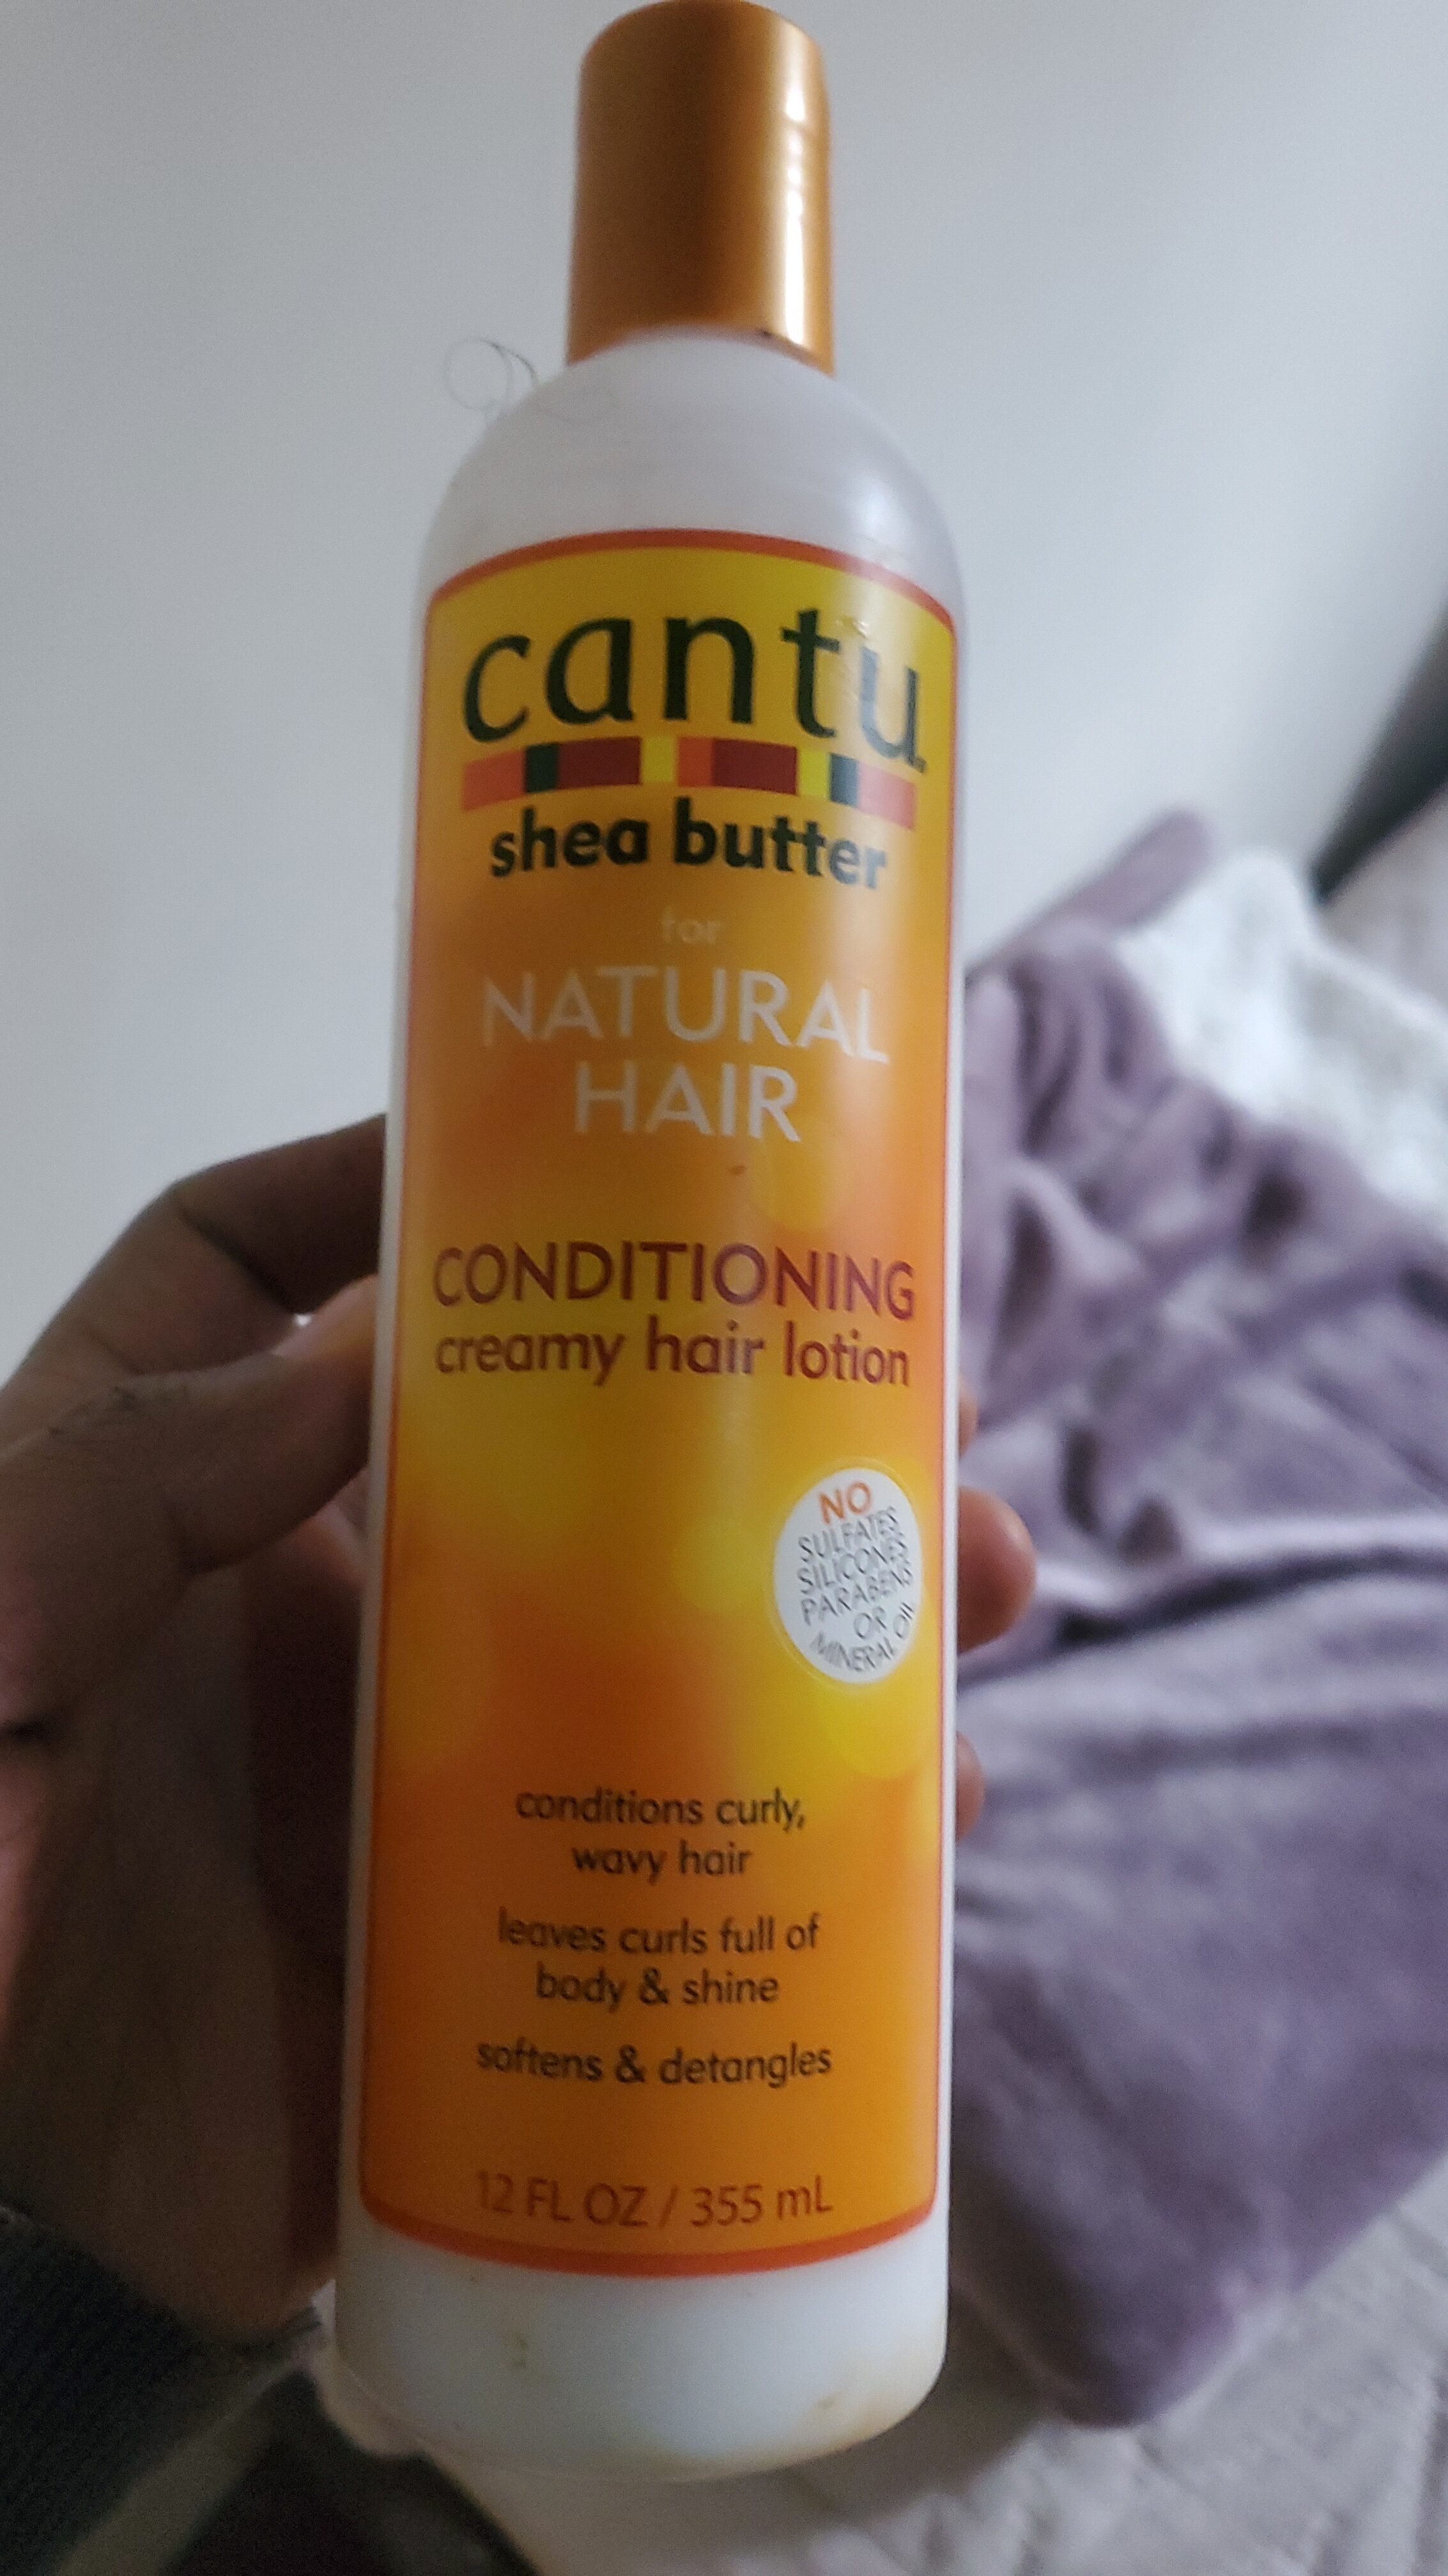 cantu shea butter for natural hair - Product - en